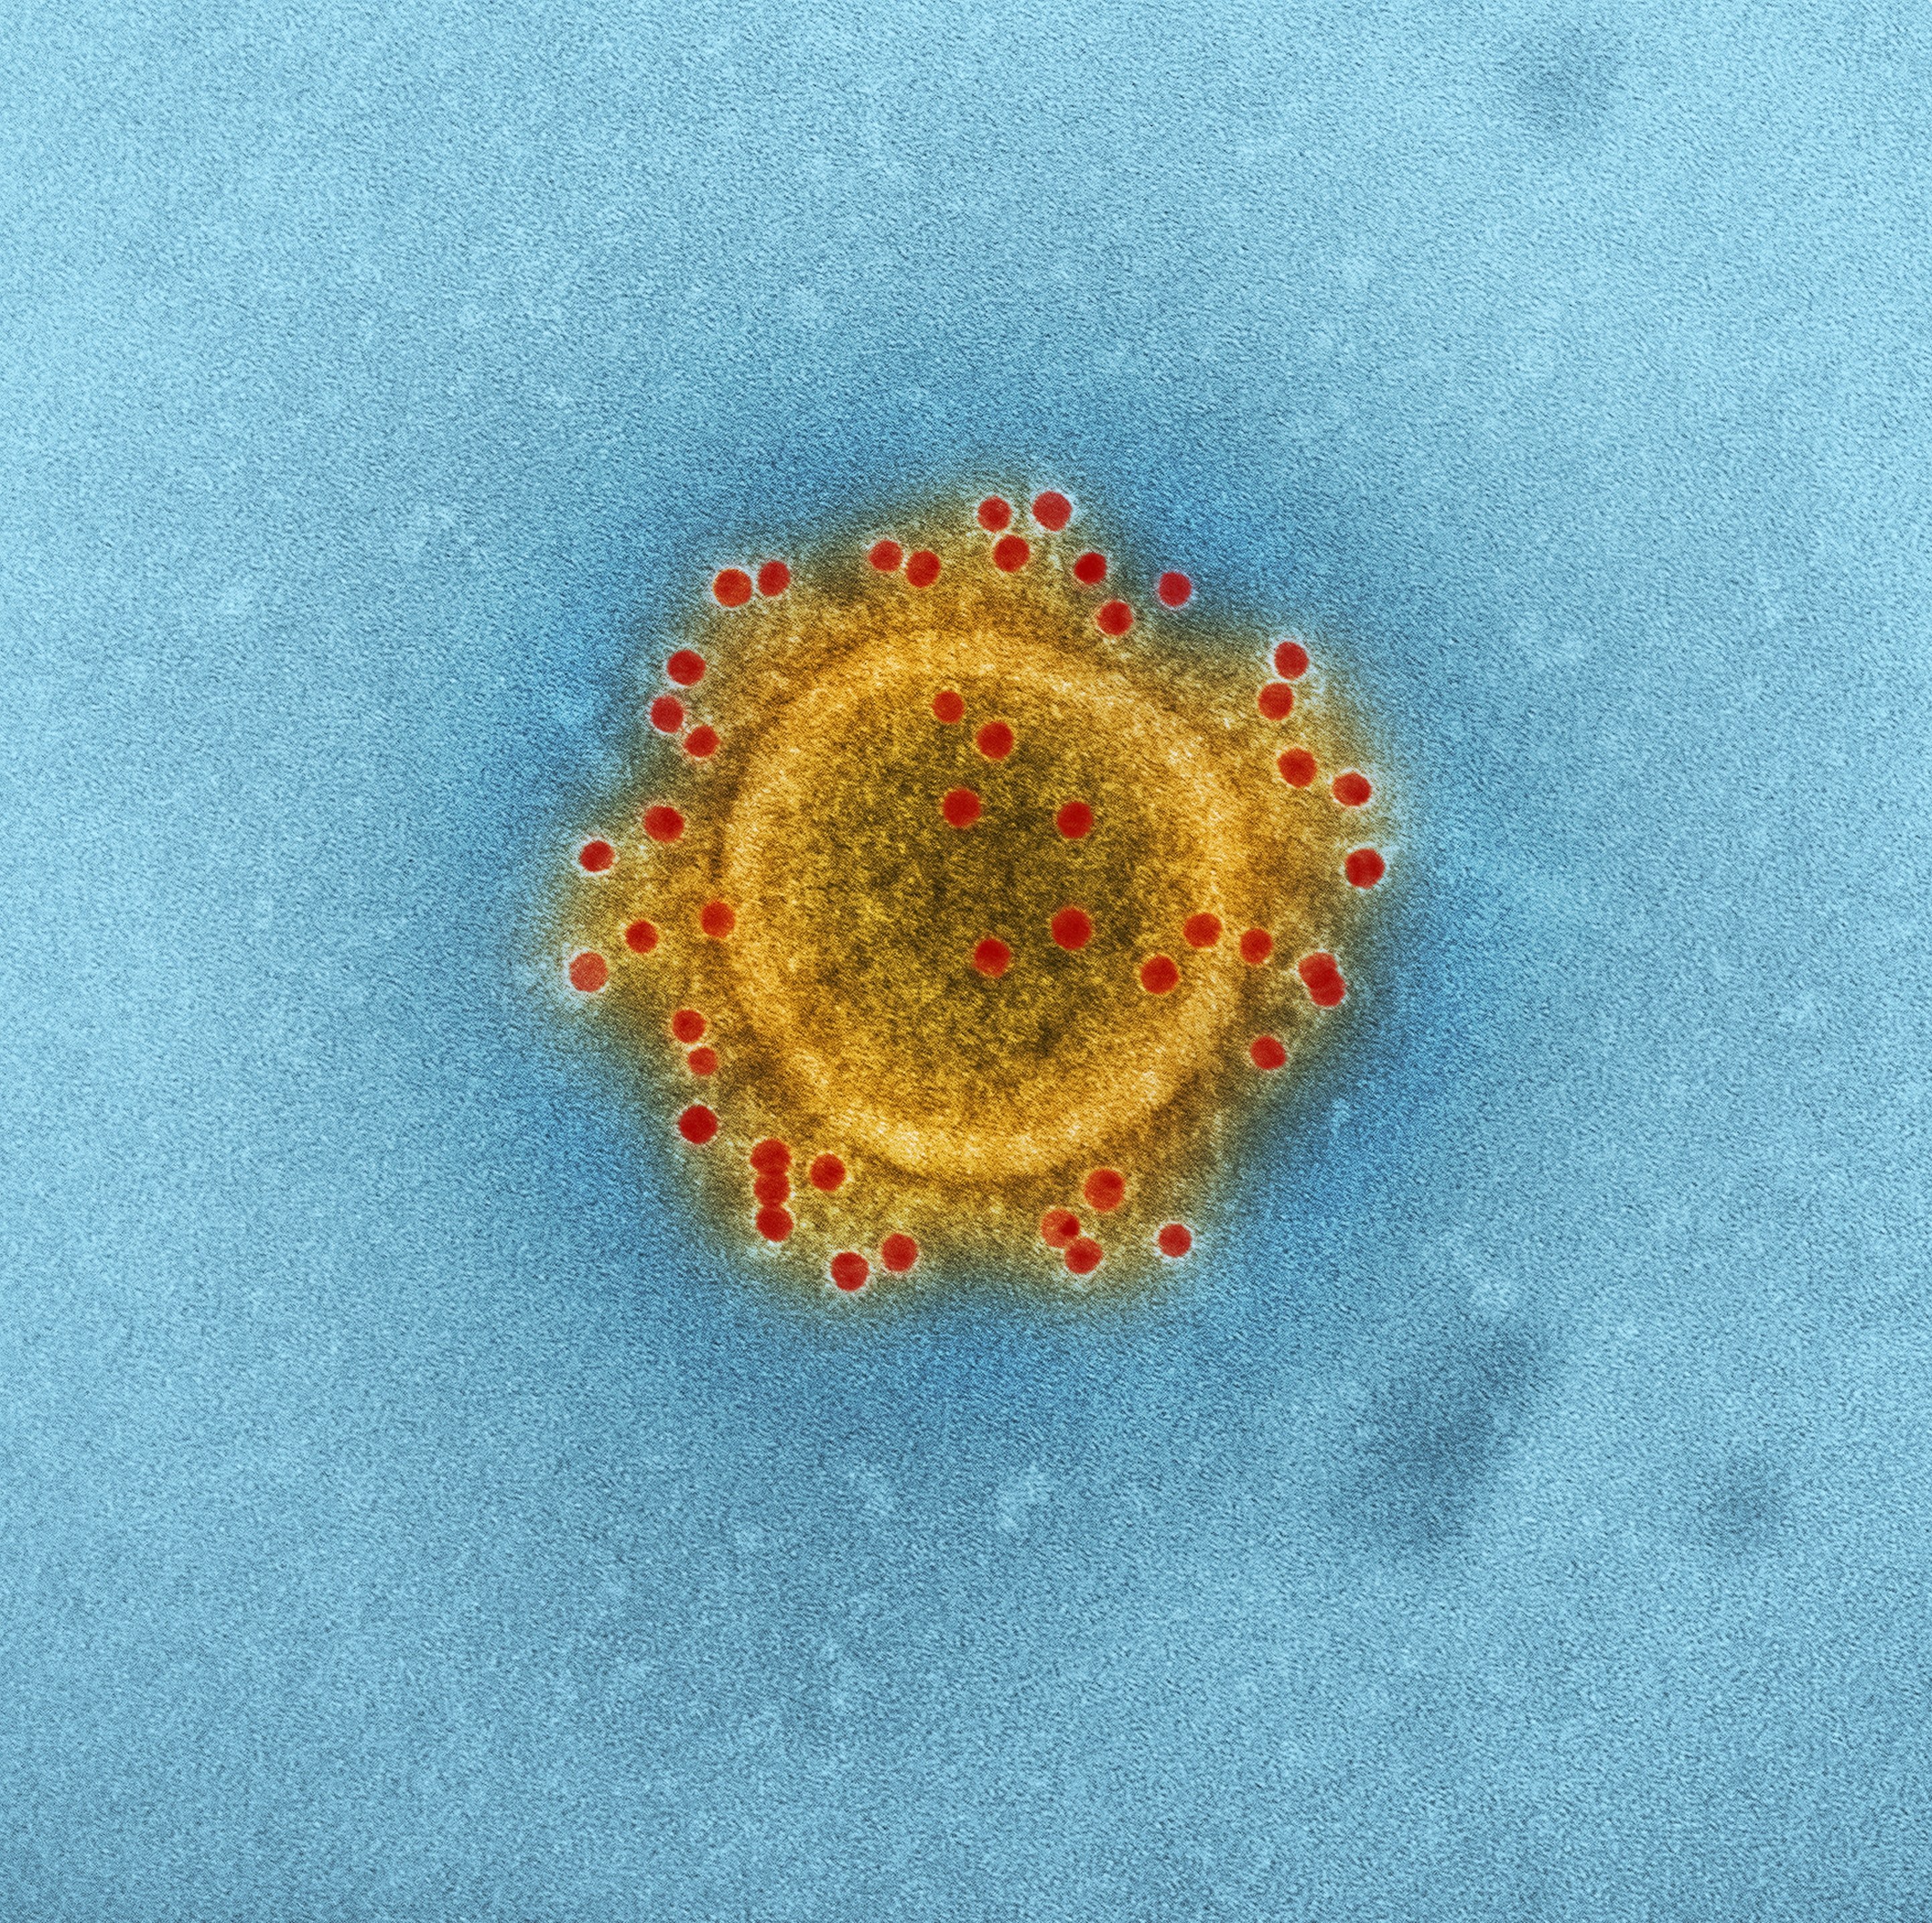 Up close photo of a virus cell | Photo: Unsplash